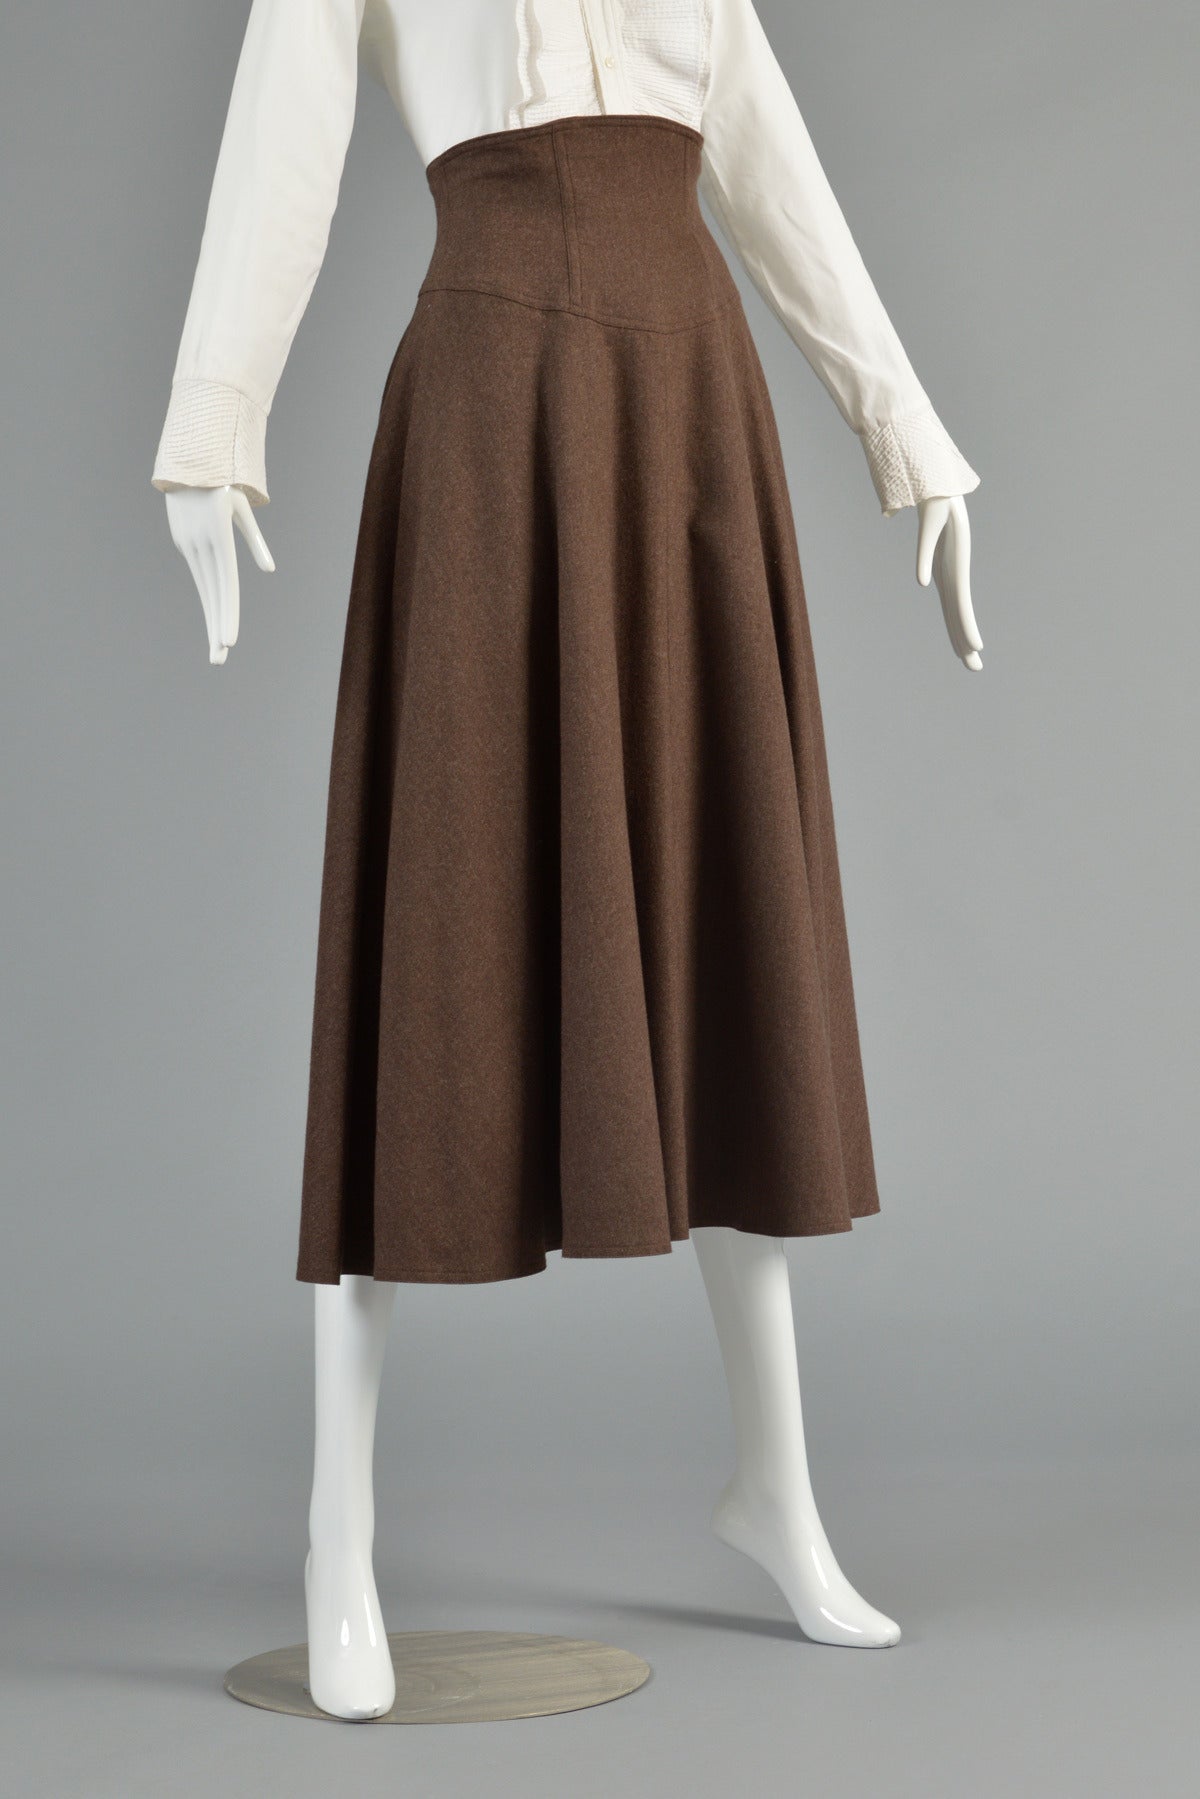 1970's Anne Klein Wool & Cashmere High Waisted Skirt 2